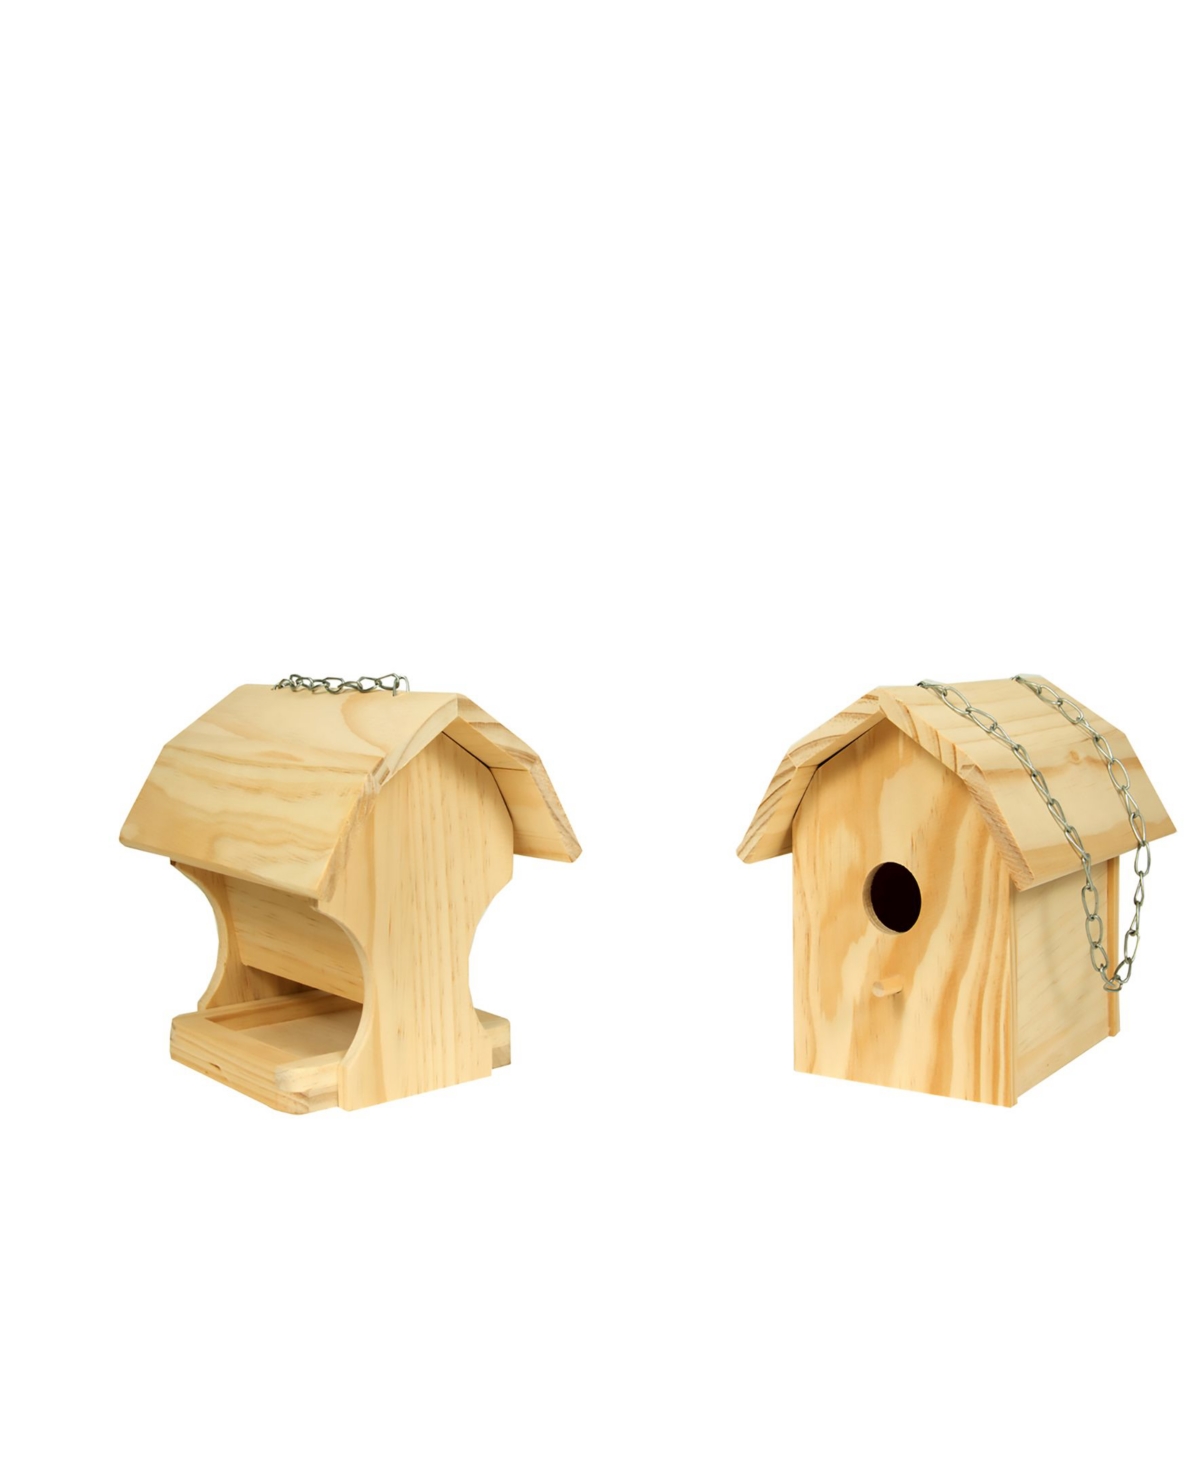 Homeware 2 Pack Combo Diy Kit Bird Feeder, Bird House In Tan